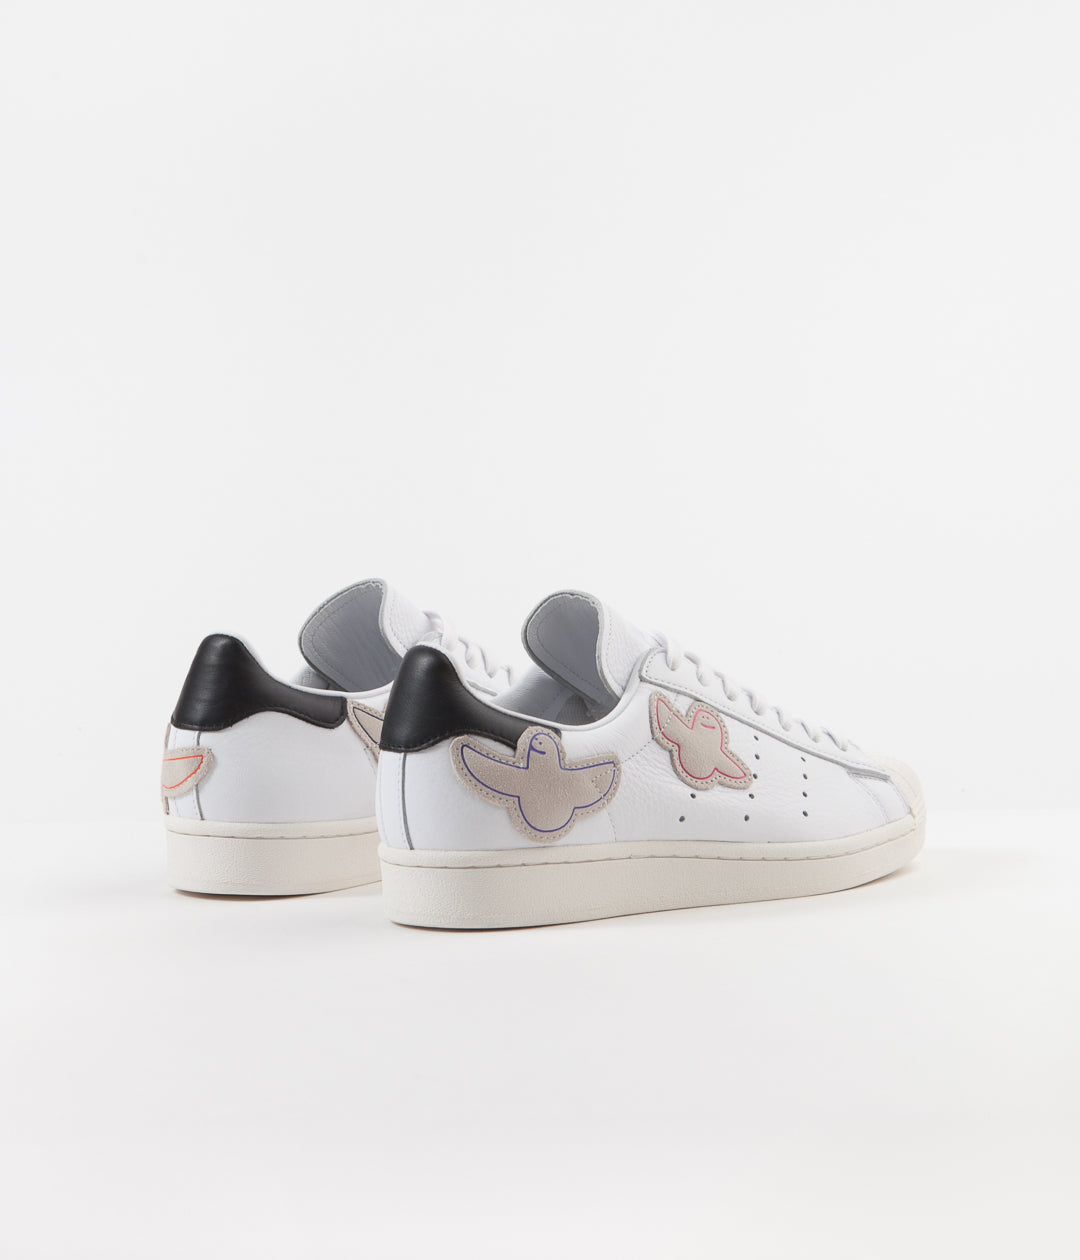 Escarpa perecer cantidad Adidas Superstar 80's 'Gonz' Shoes - White / Core Black / Chalk White |  Flatspot